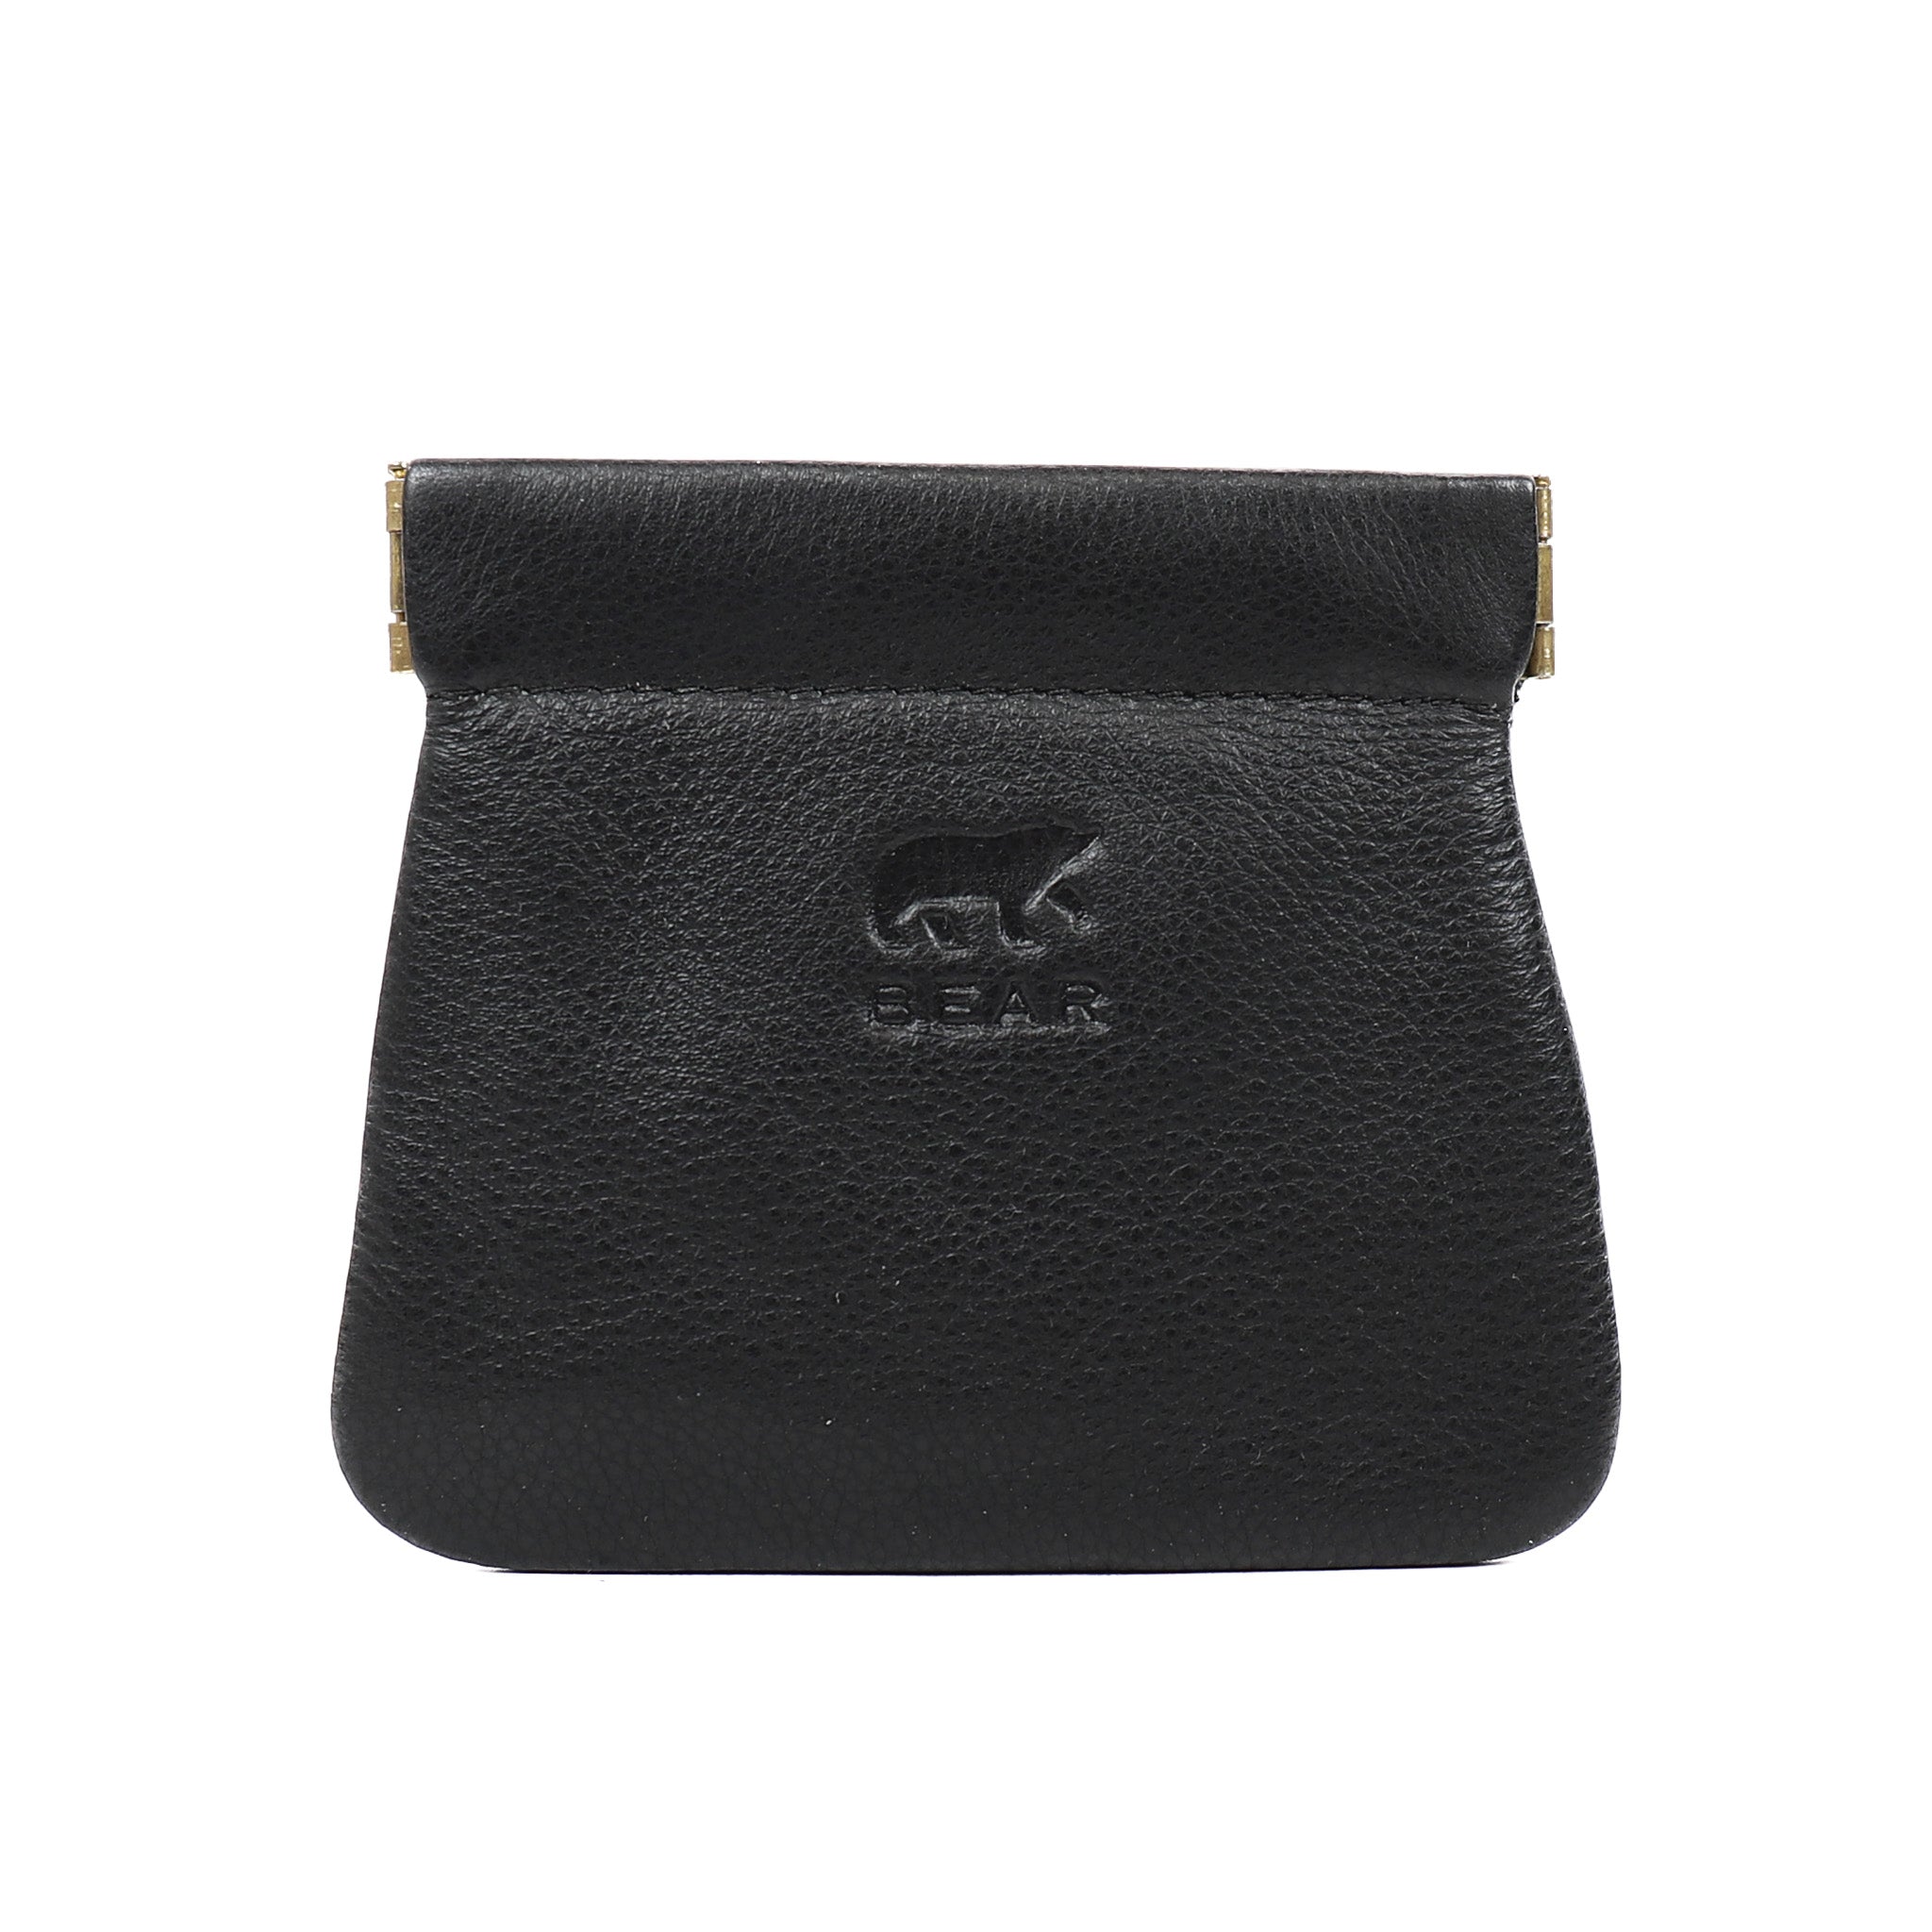 Squeeze wallet 'Anna' black